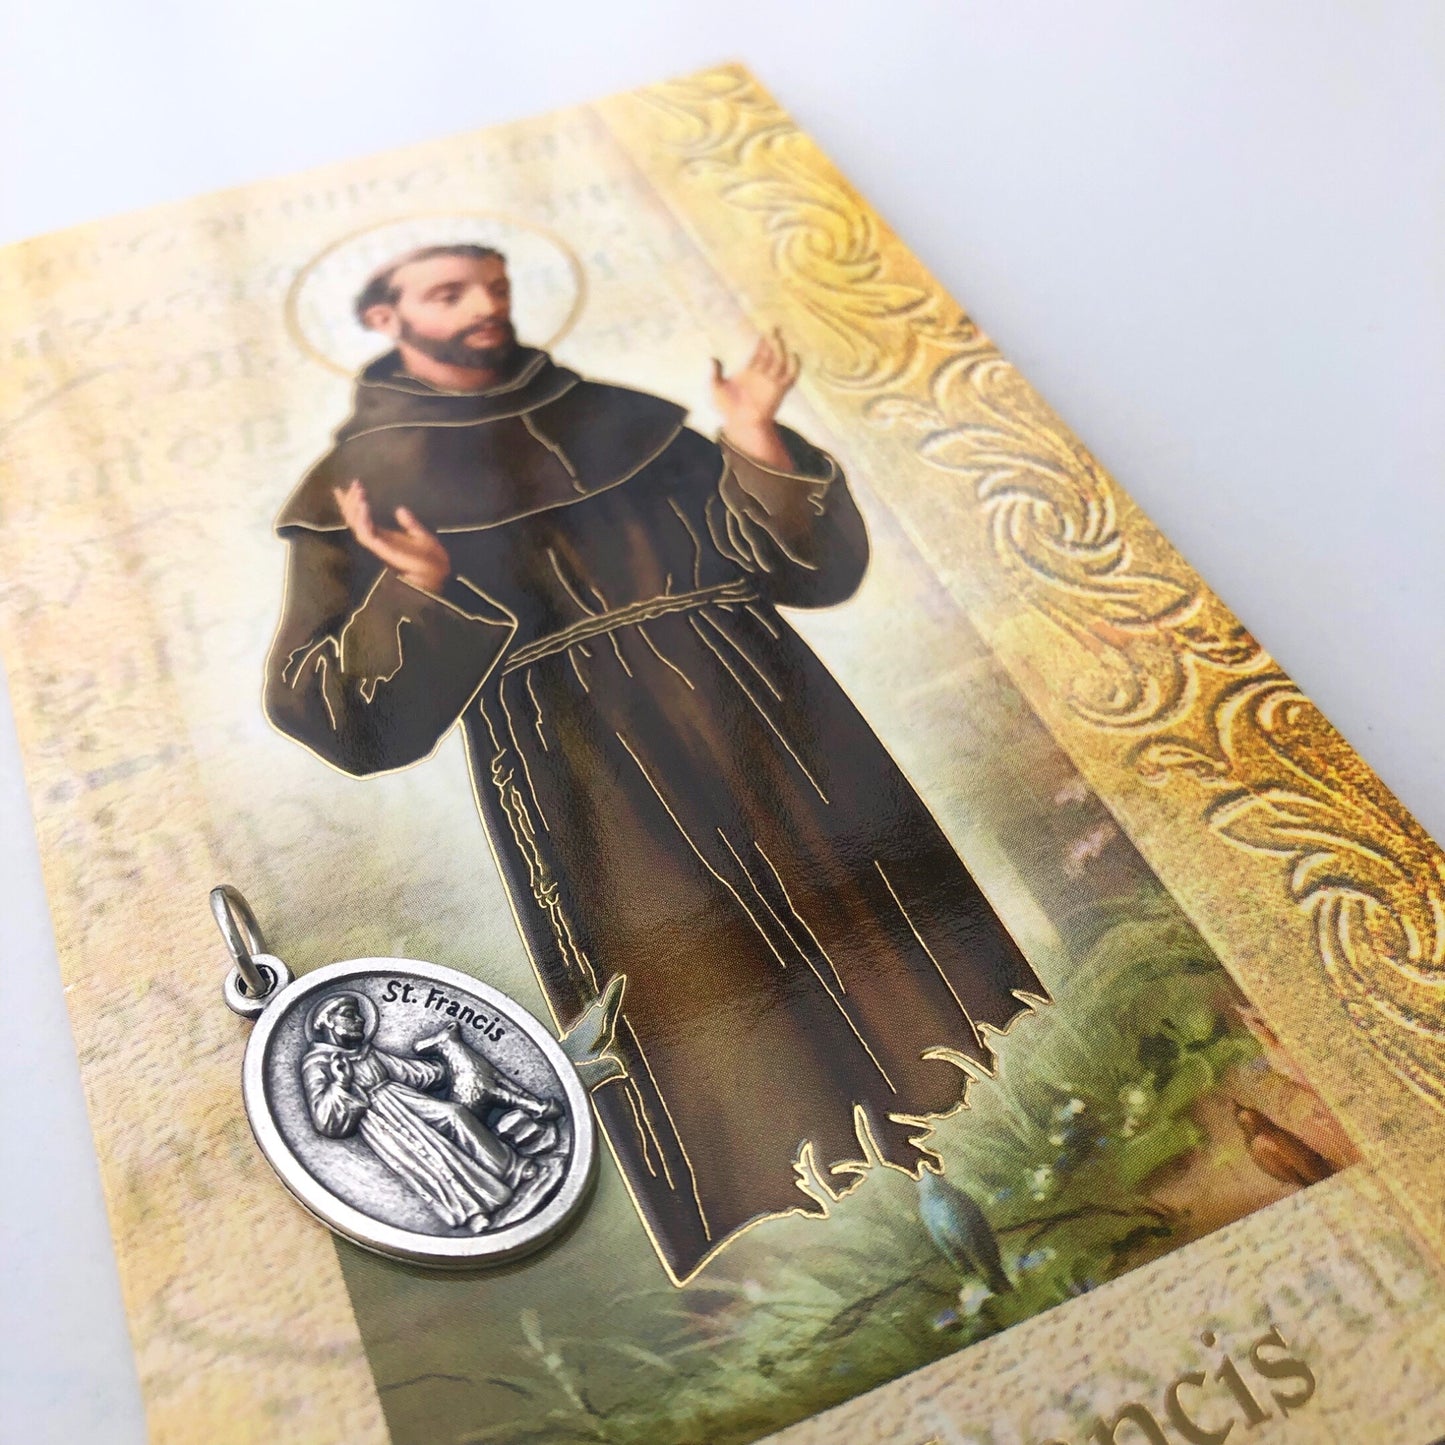 Pamphlet: St Francis